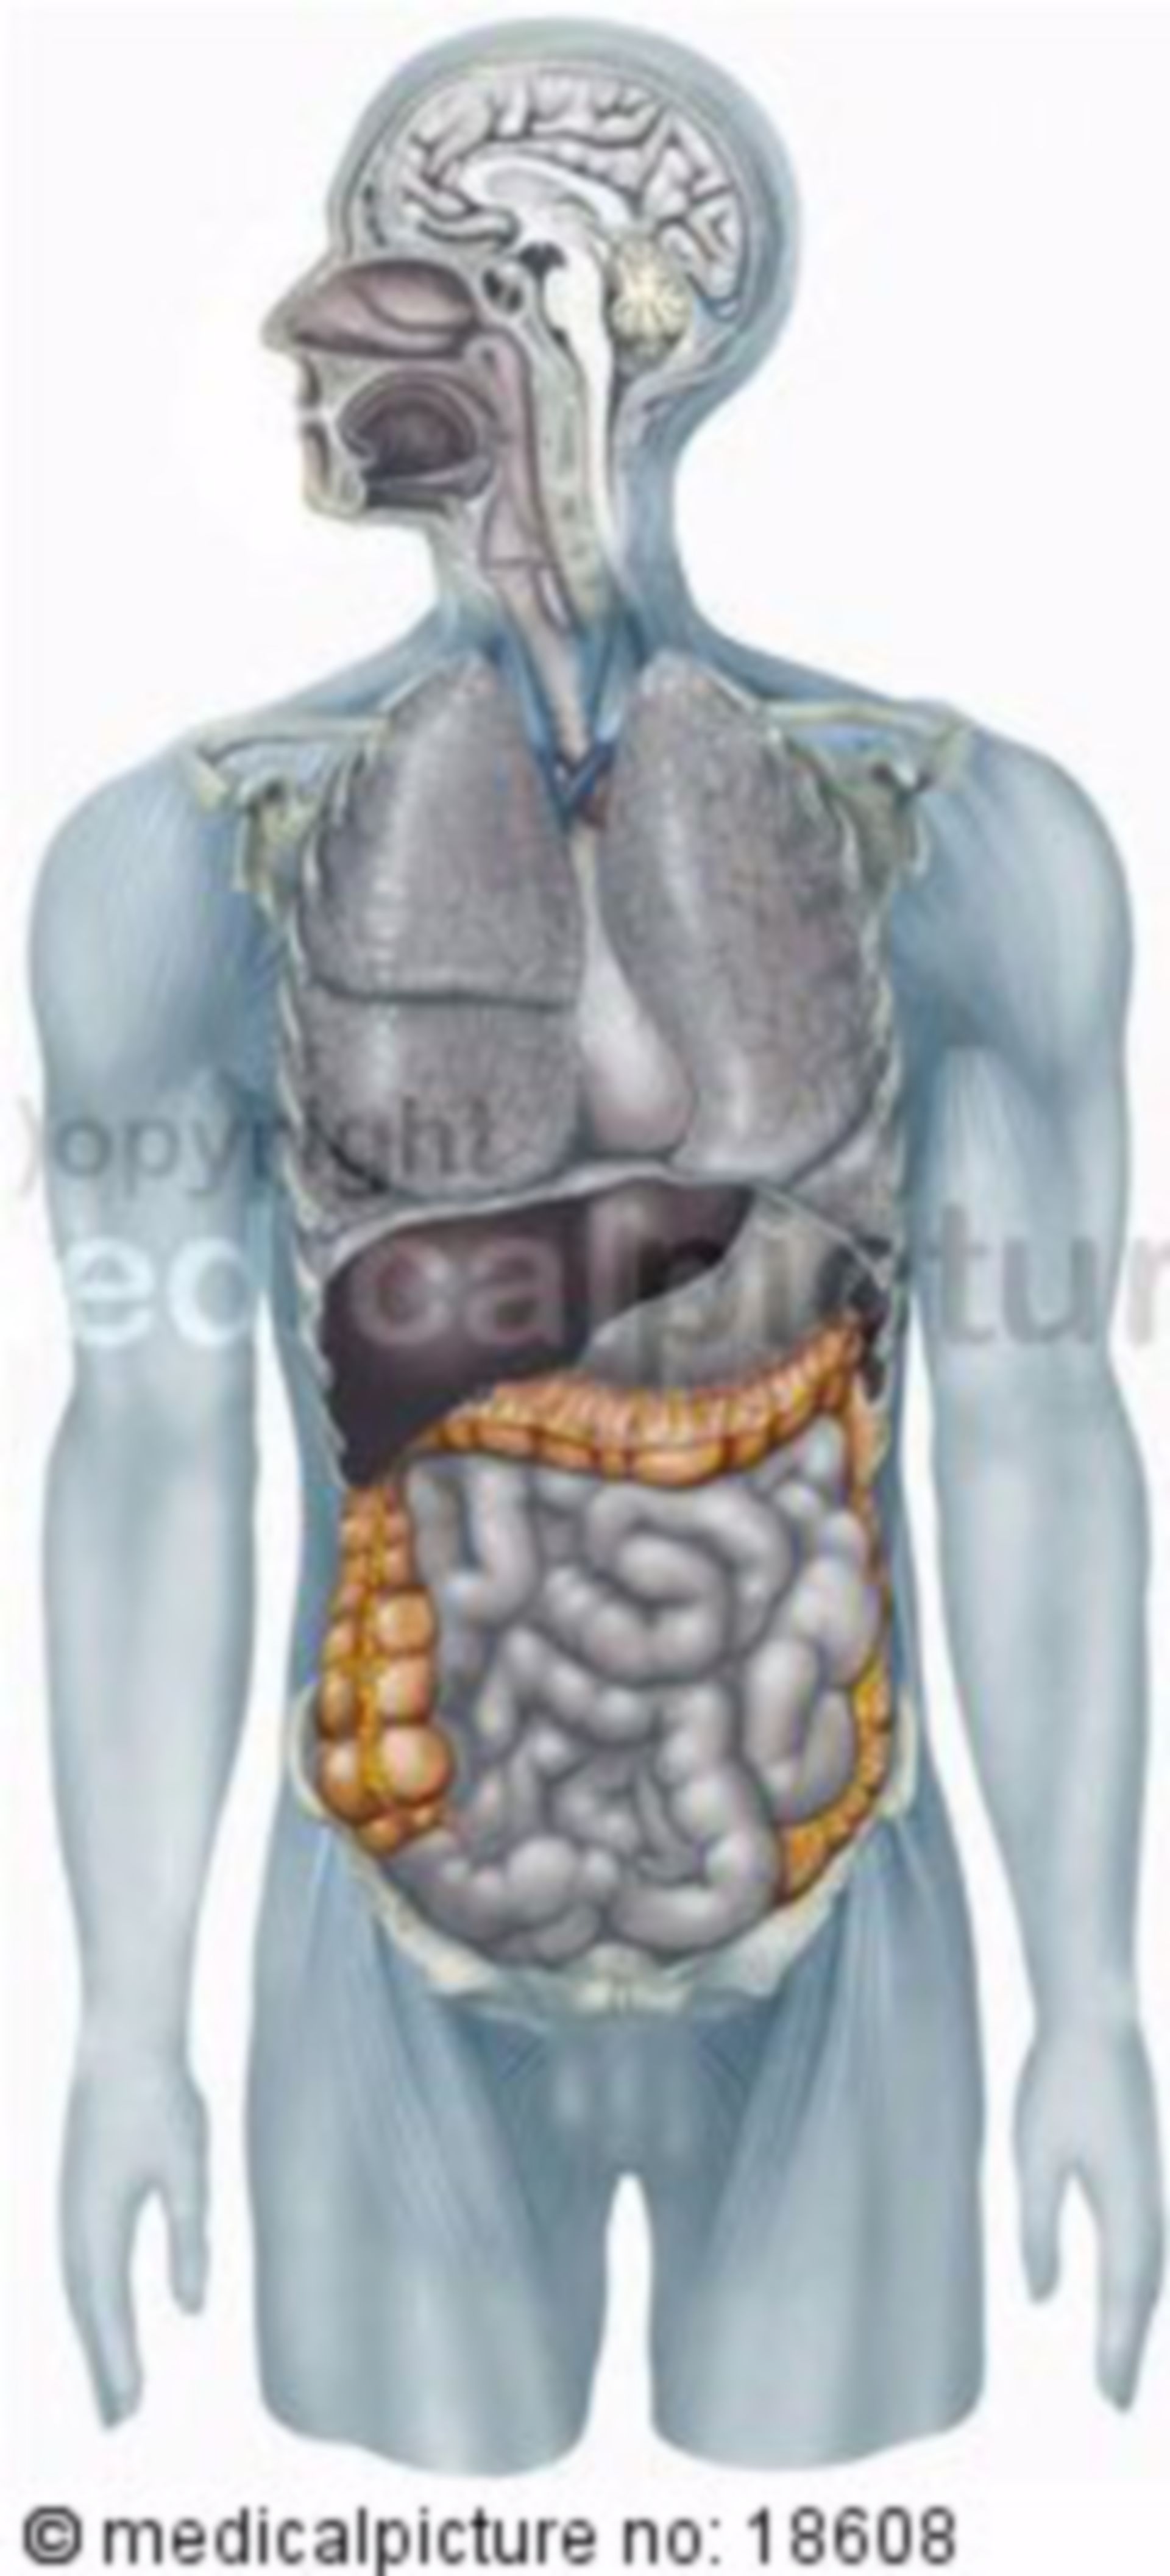 Thorax and abdominal organs